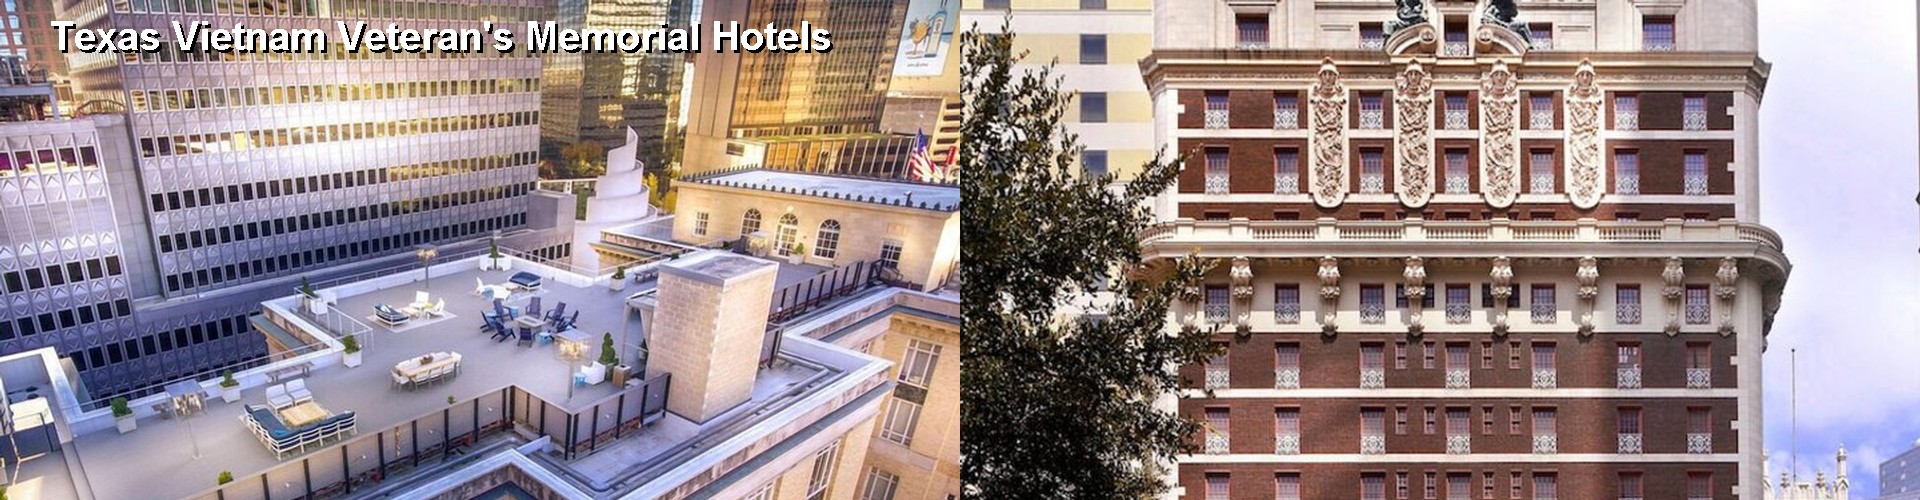 5 Best Hotels near Texas Vietnam Veteran's Memorial